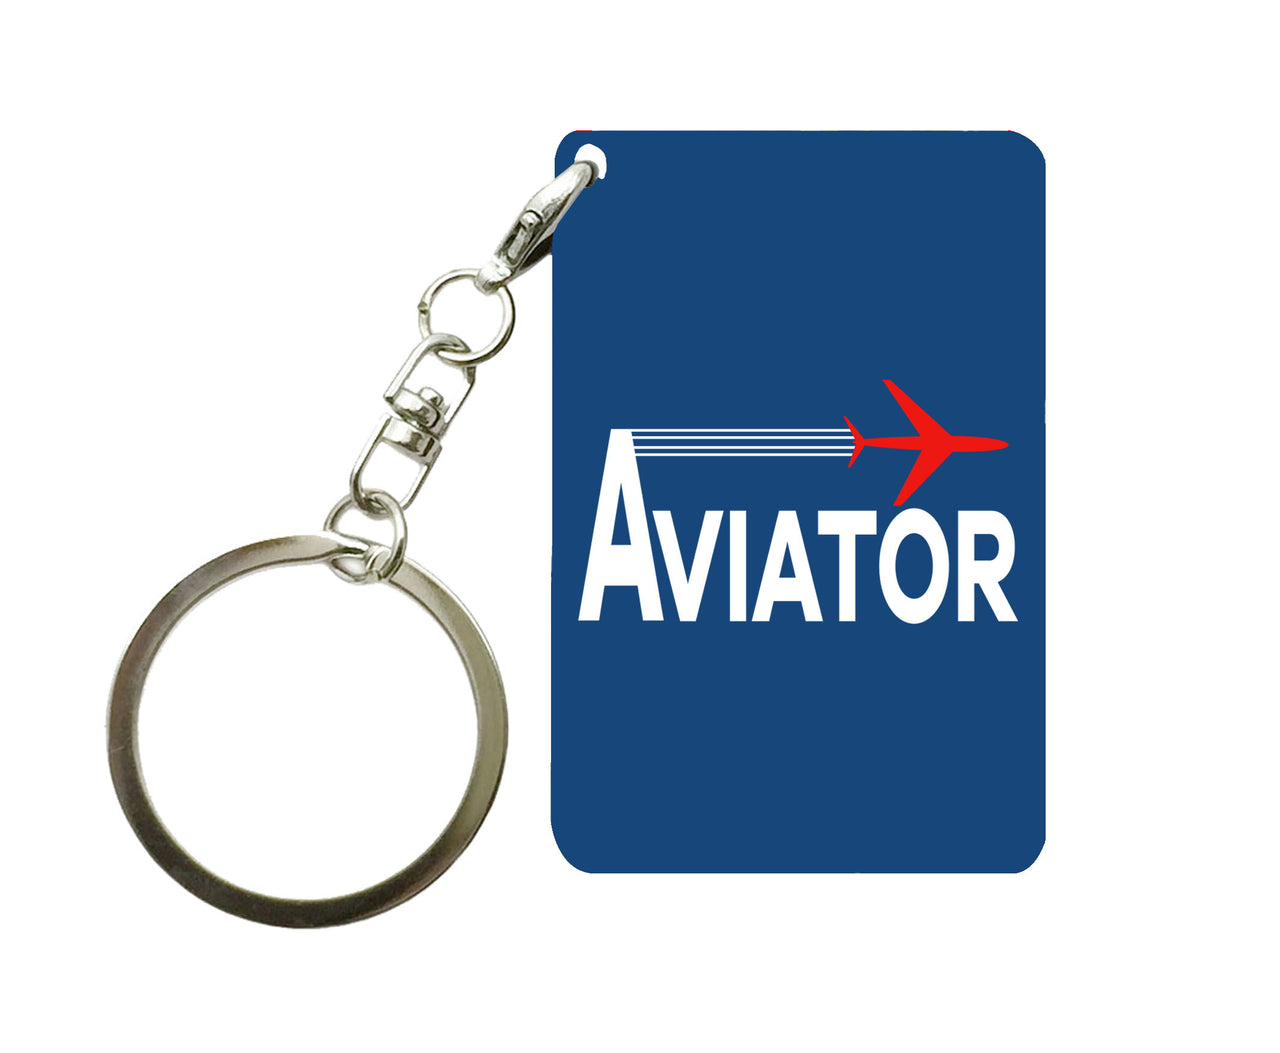 Aviator Designed Key Chains